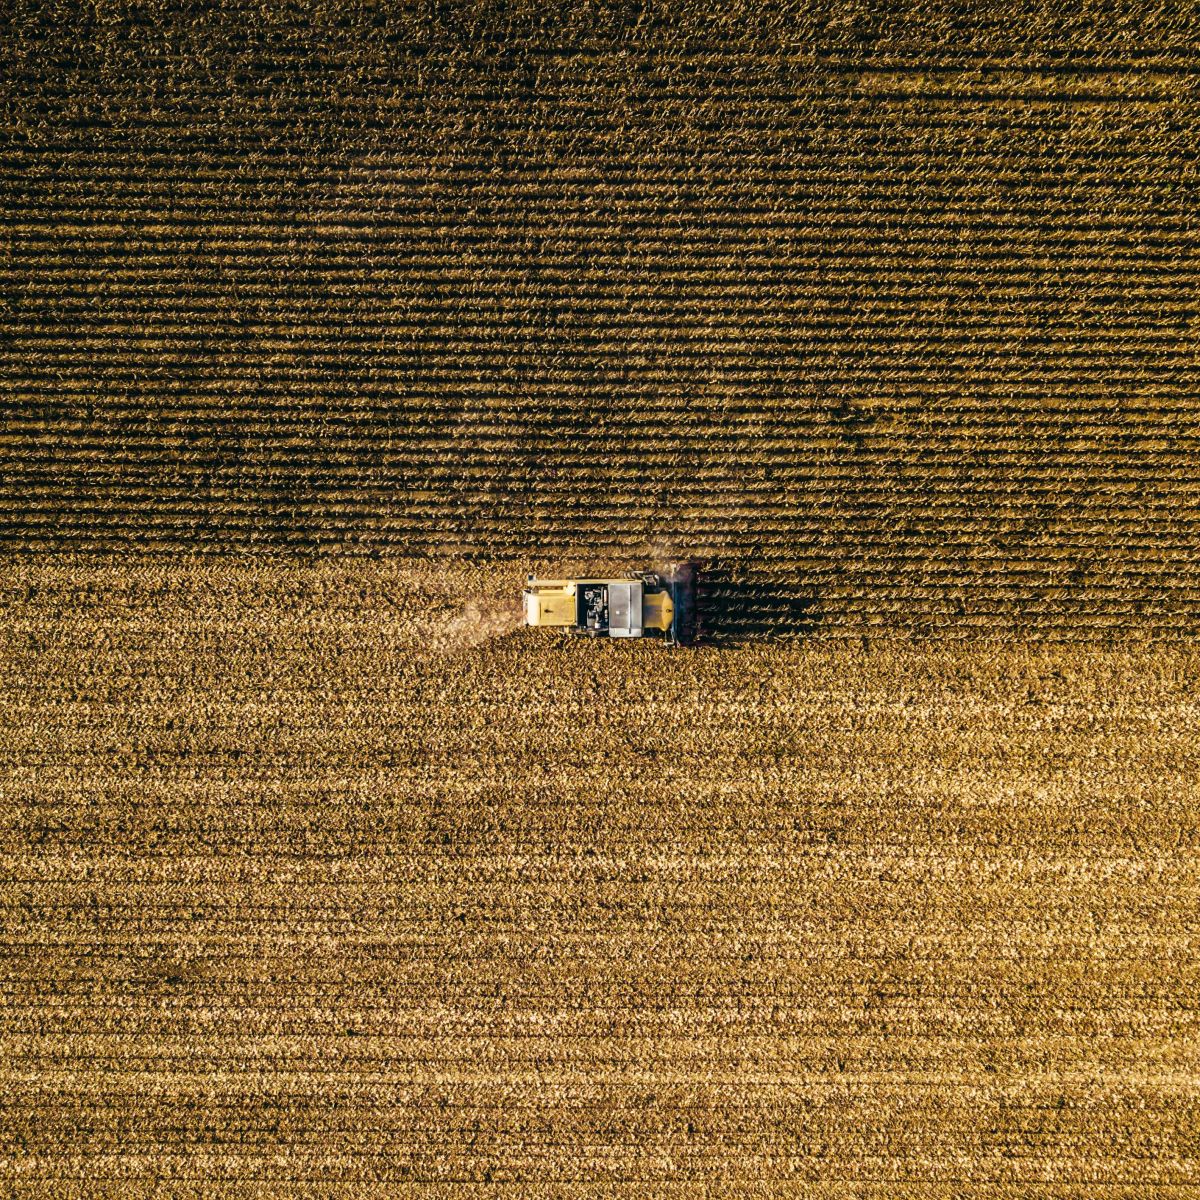 Harvesting wheat by Bence Balla-Schottner via Unsplash